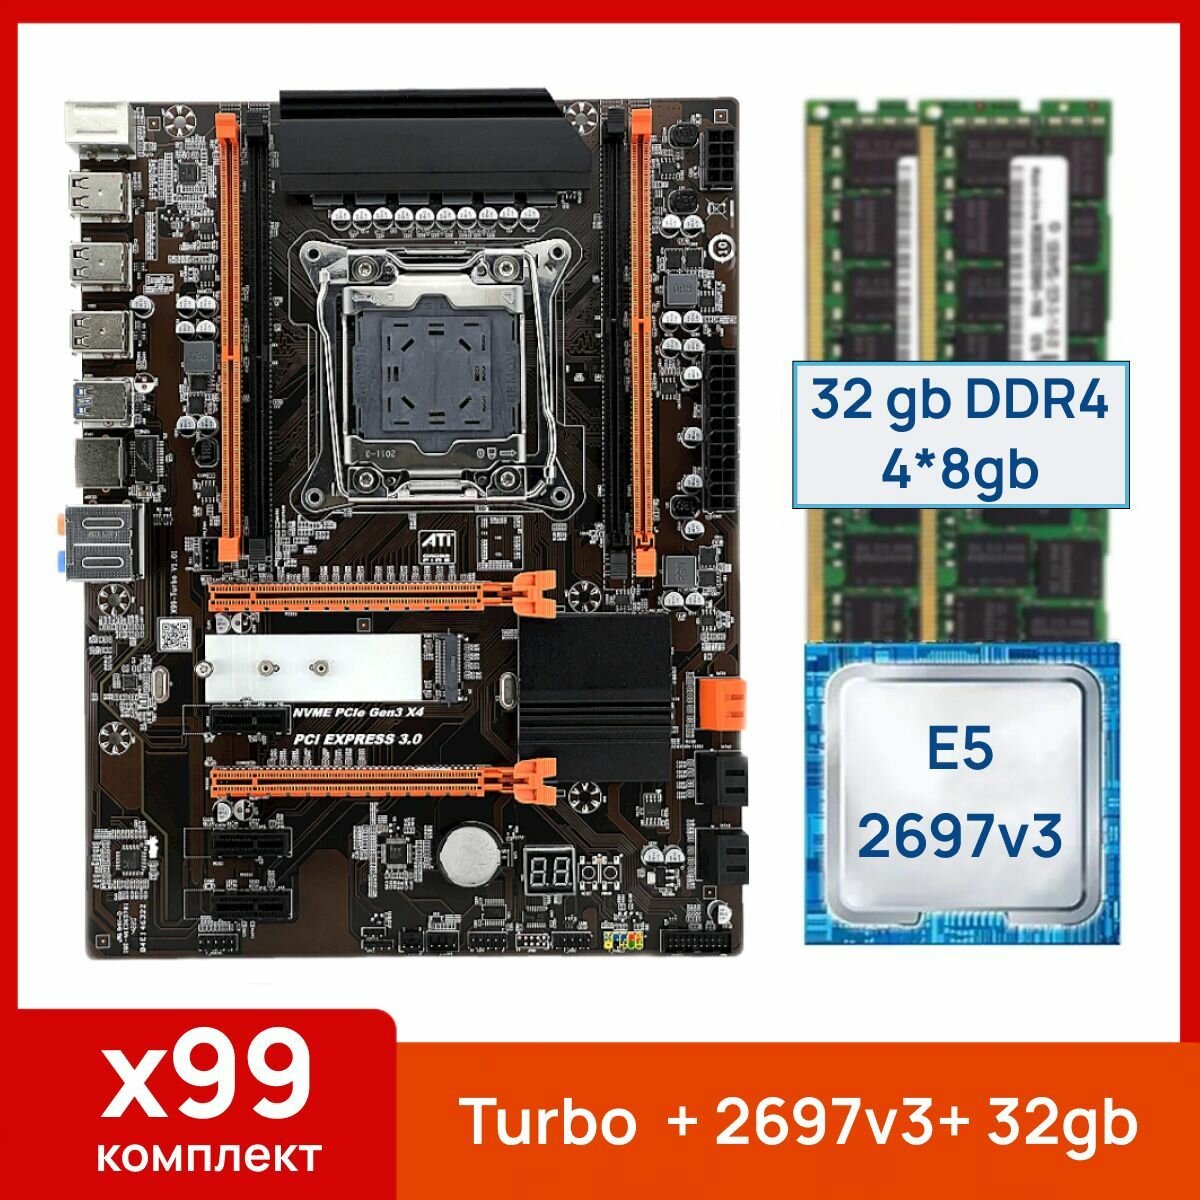 Комплект: Atermiter x99-Turbo + Xeon E5 2697v3 + 32 gb (4x8gb) DDR4 ecc reg